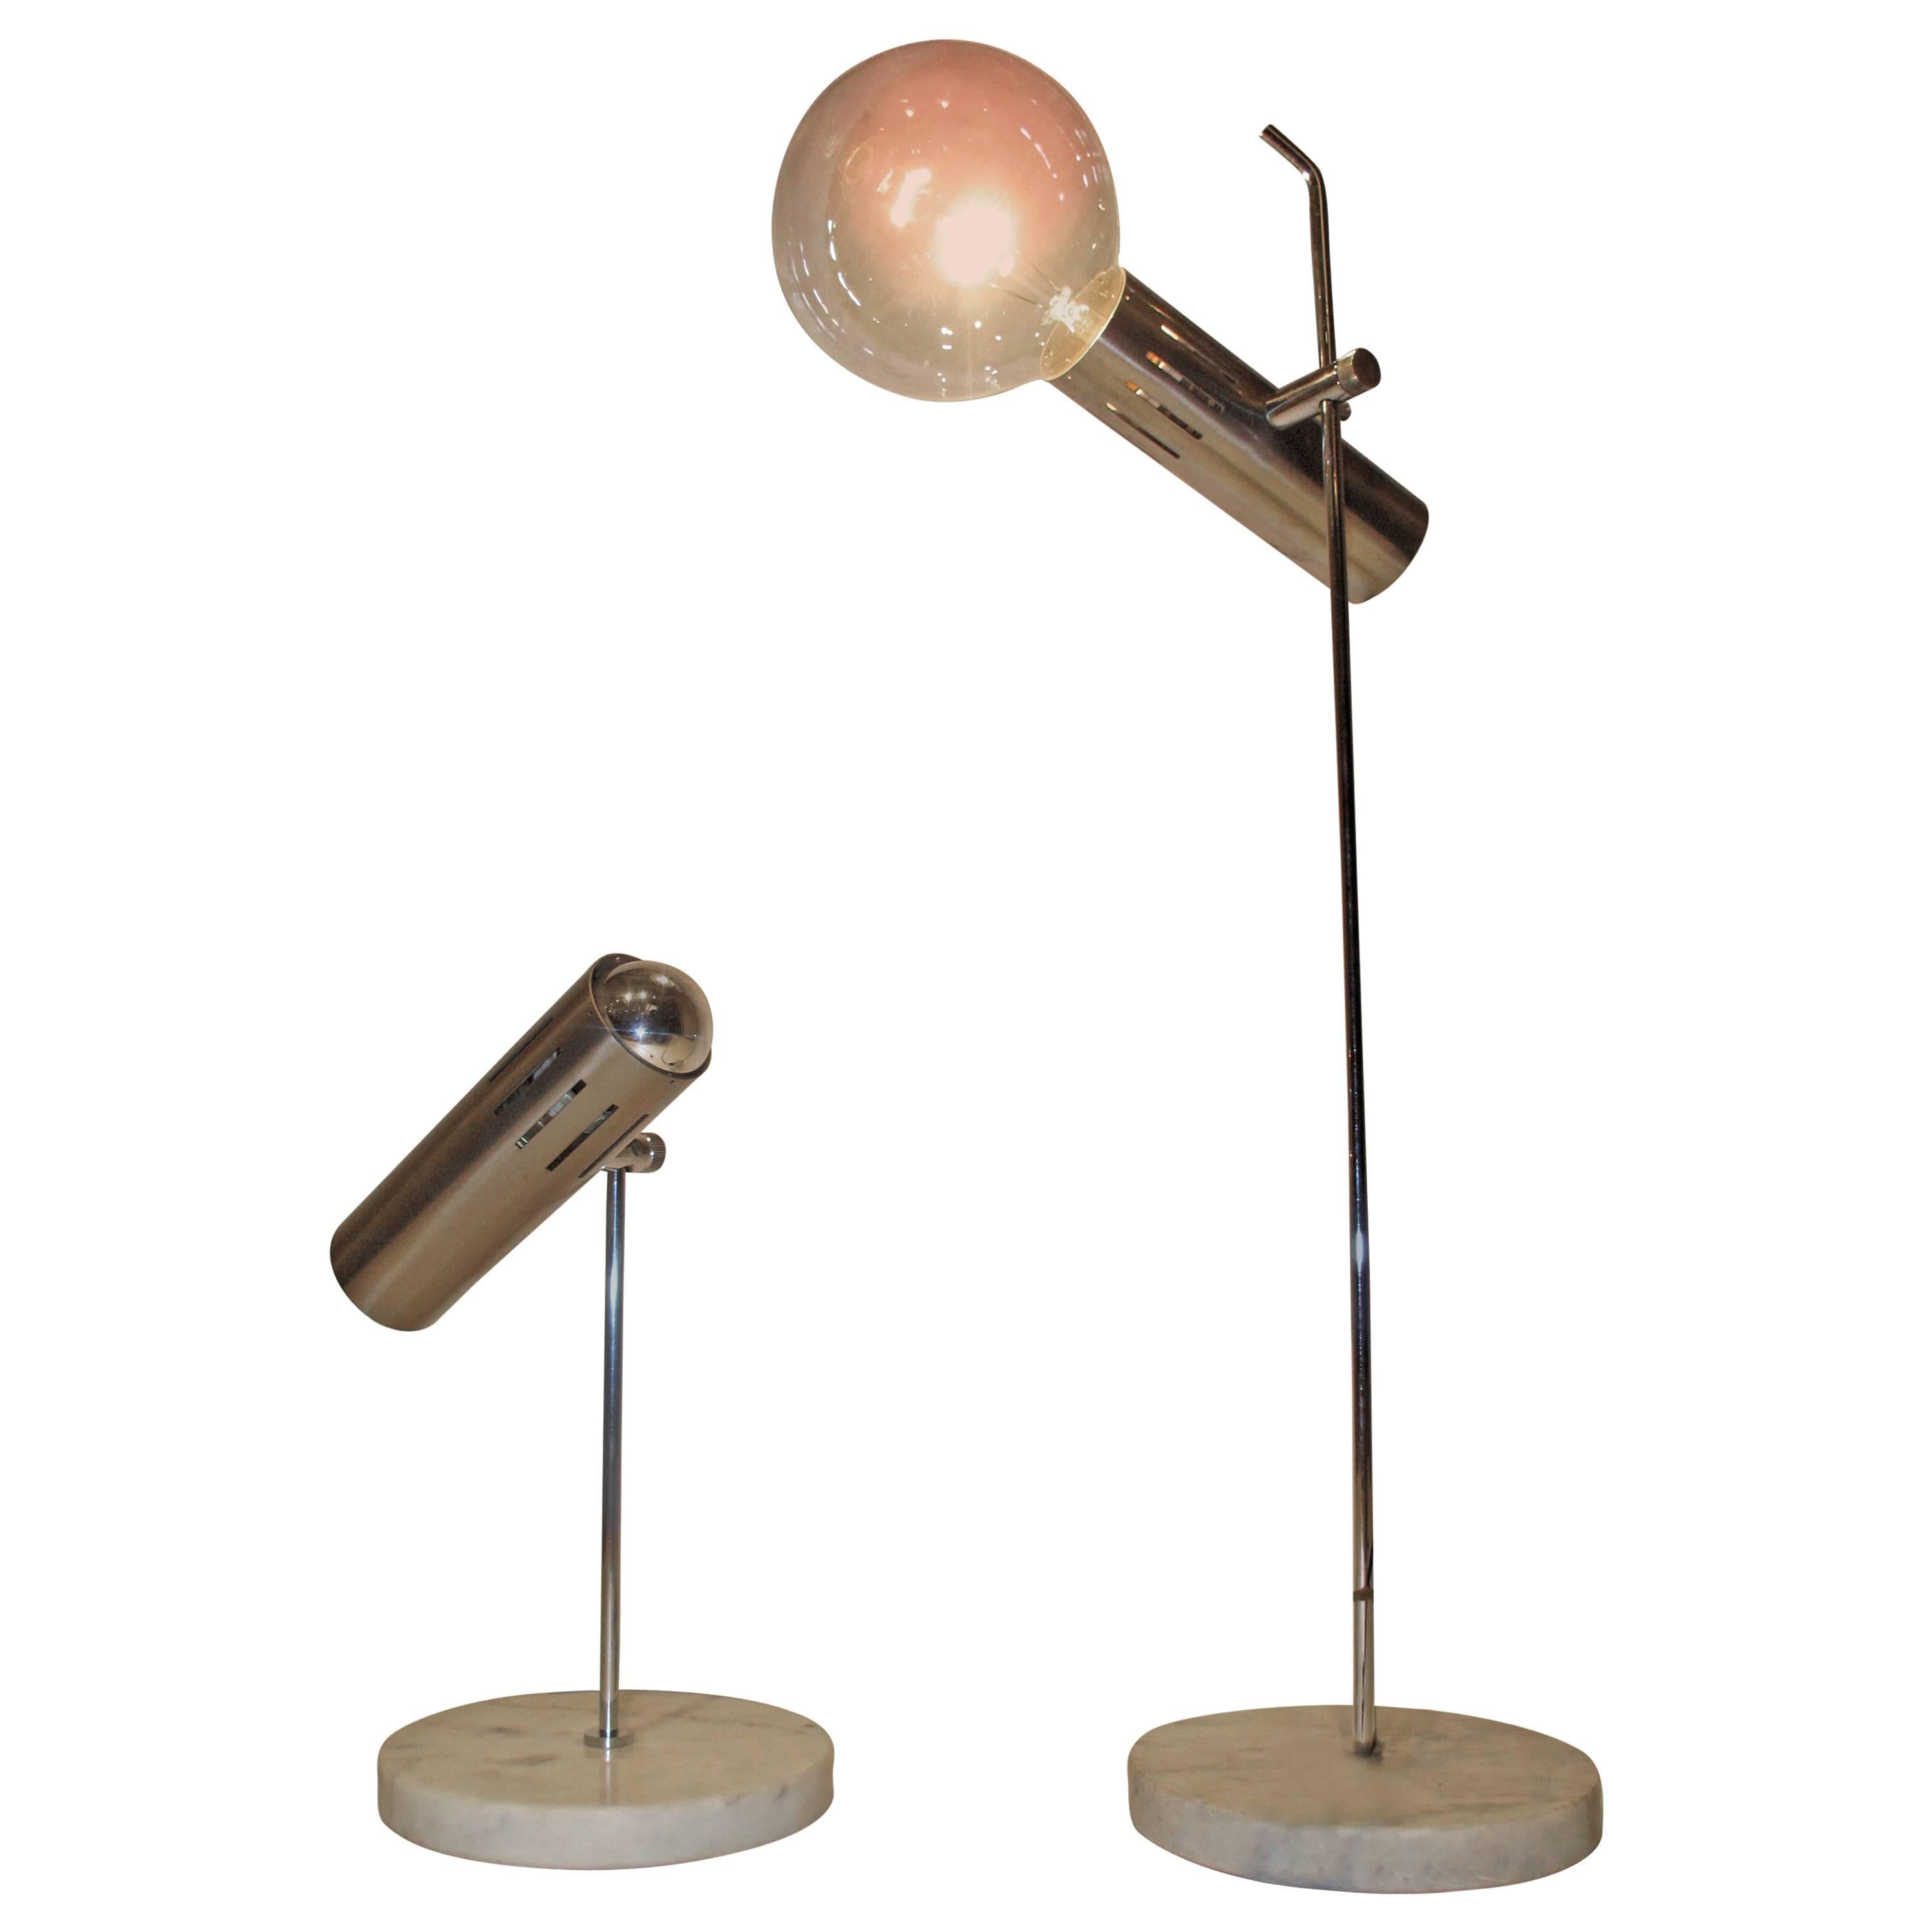 Two Lamp A4L, Alain Richard, Pierre Disderot Edition, 1958